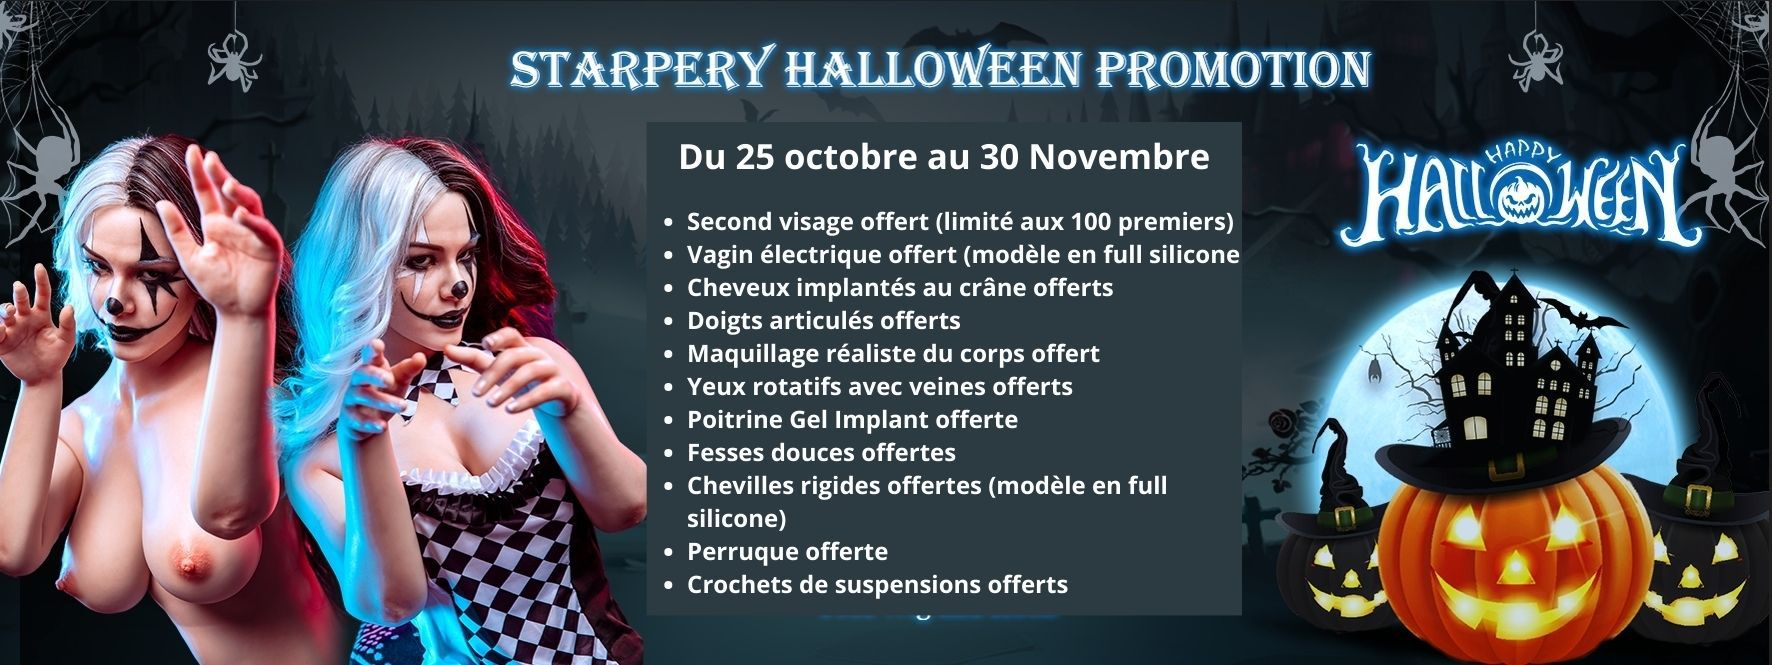 Starpery promotion Halloween